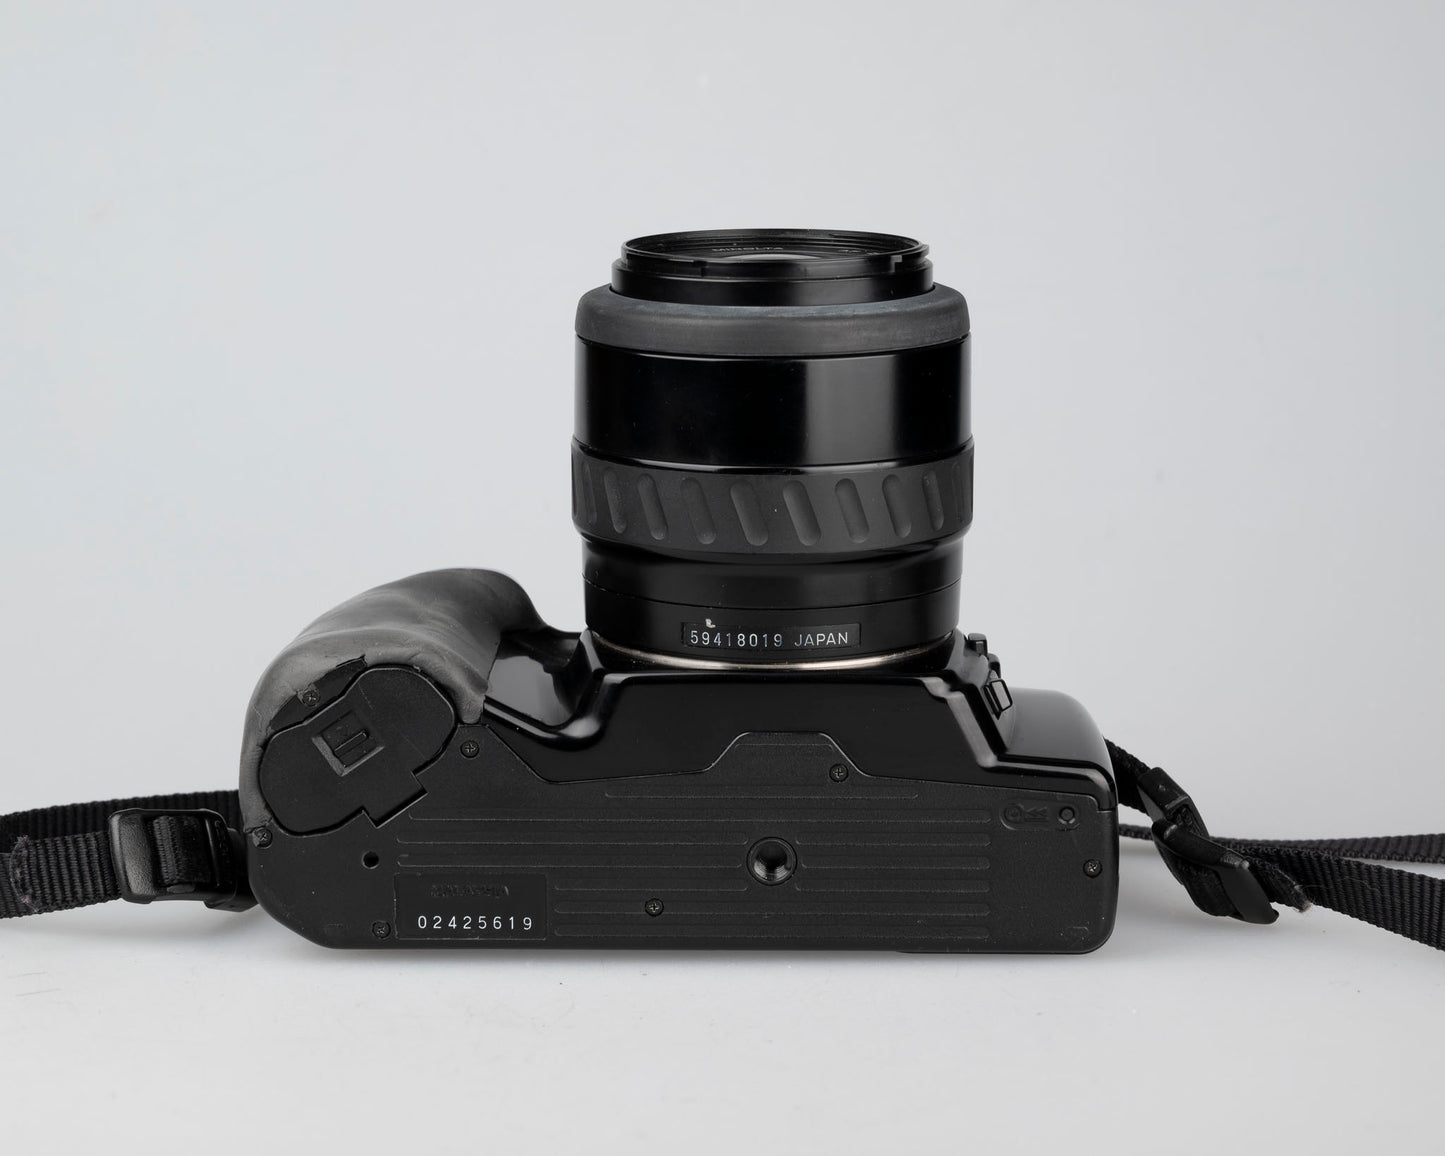 Reflex Minolta Maxxum 3xi 35 mm avec objectif 35-70 mm (série 02425619)